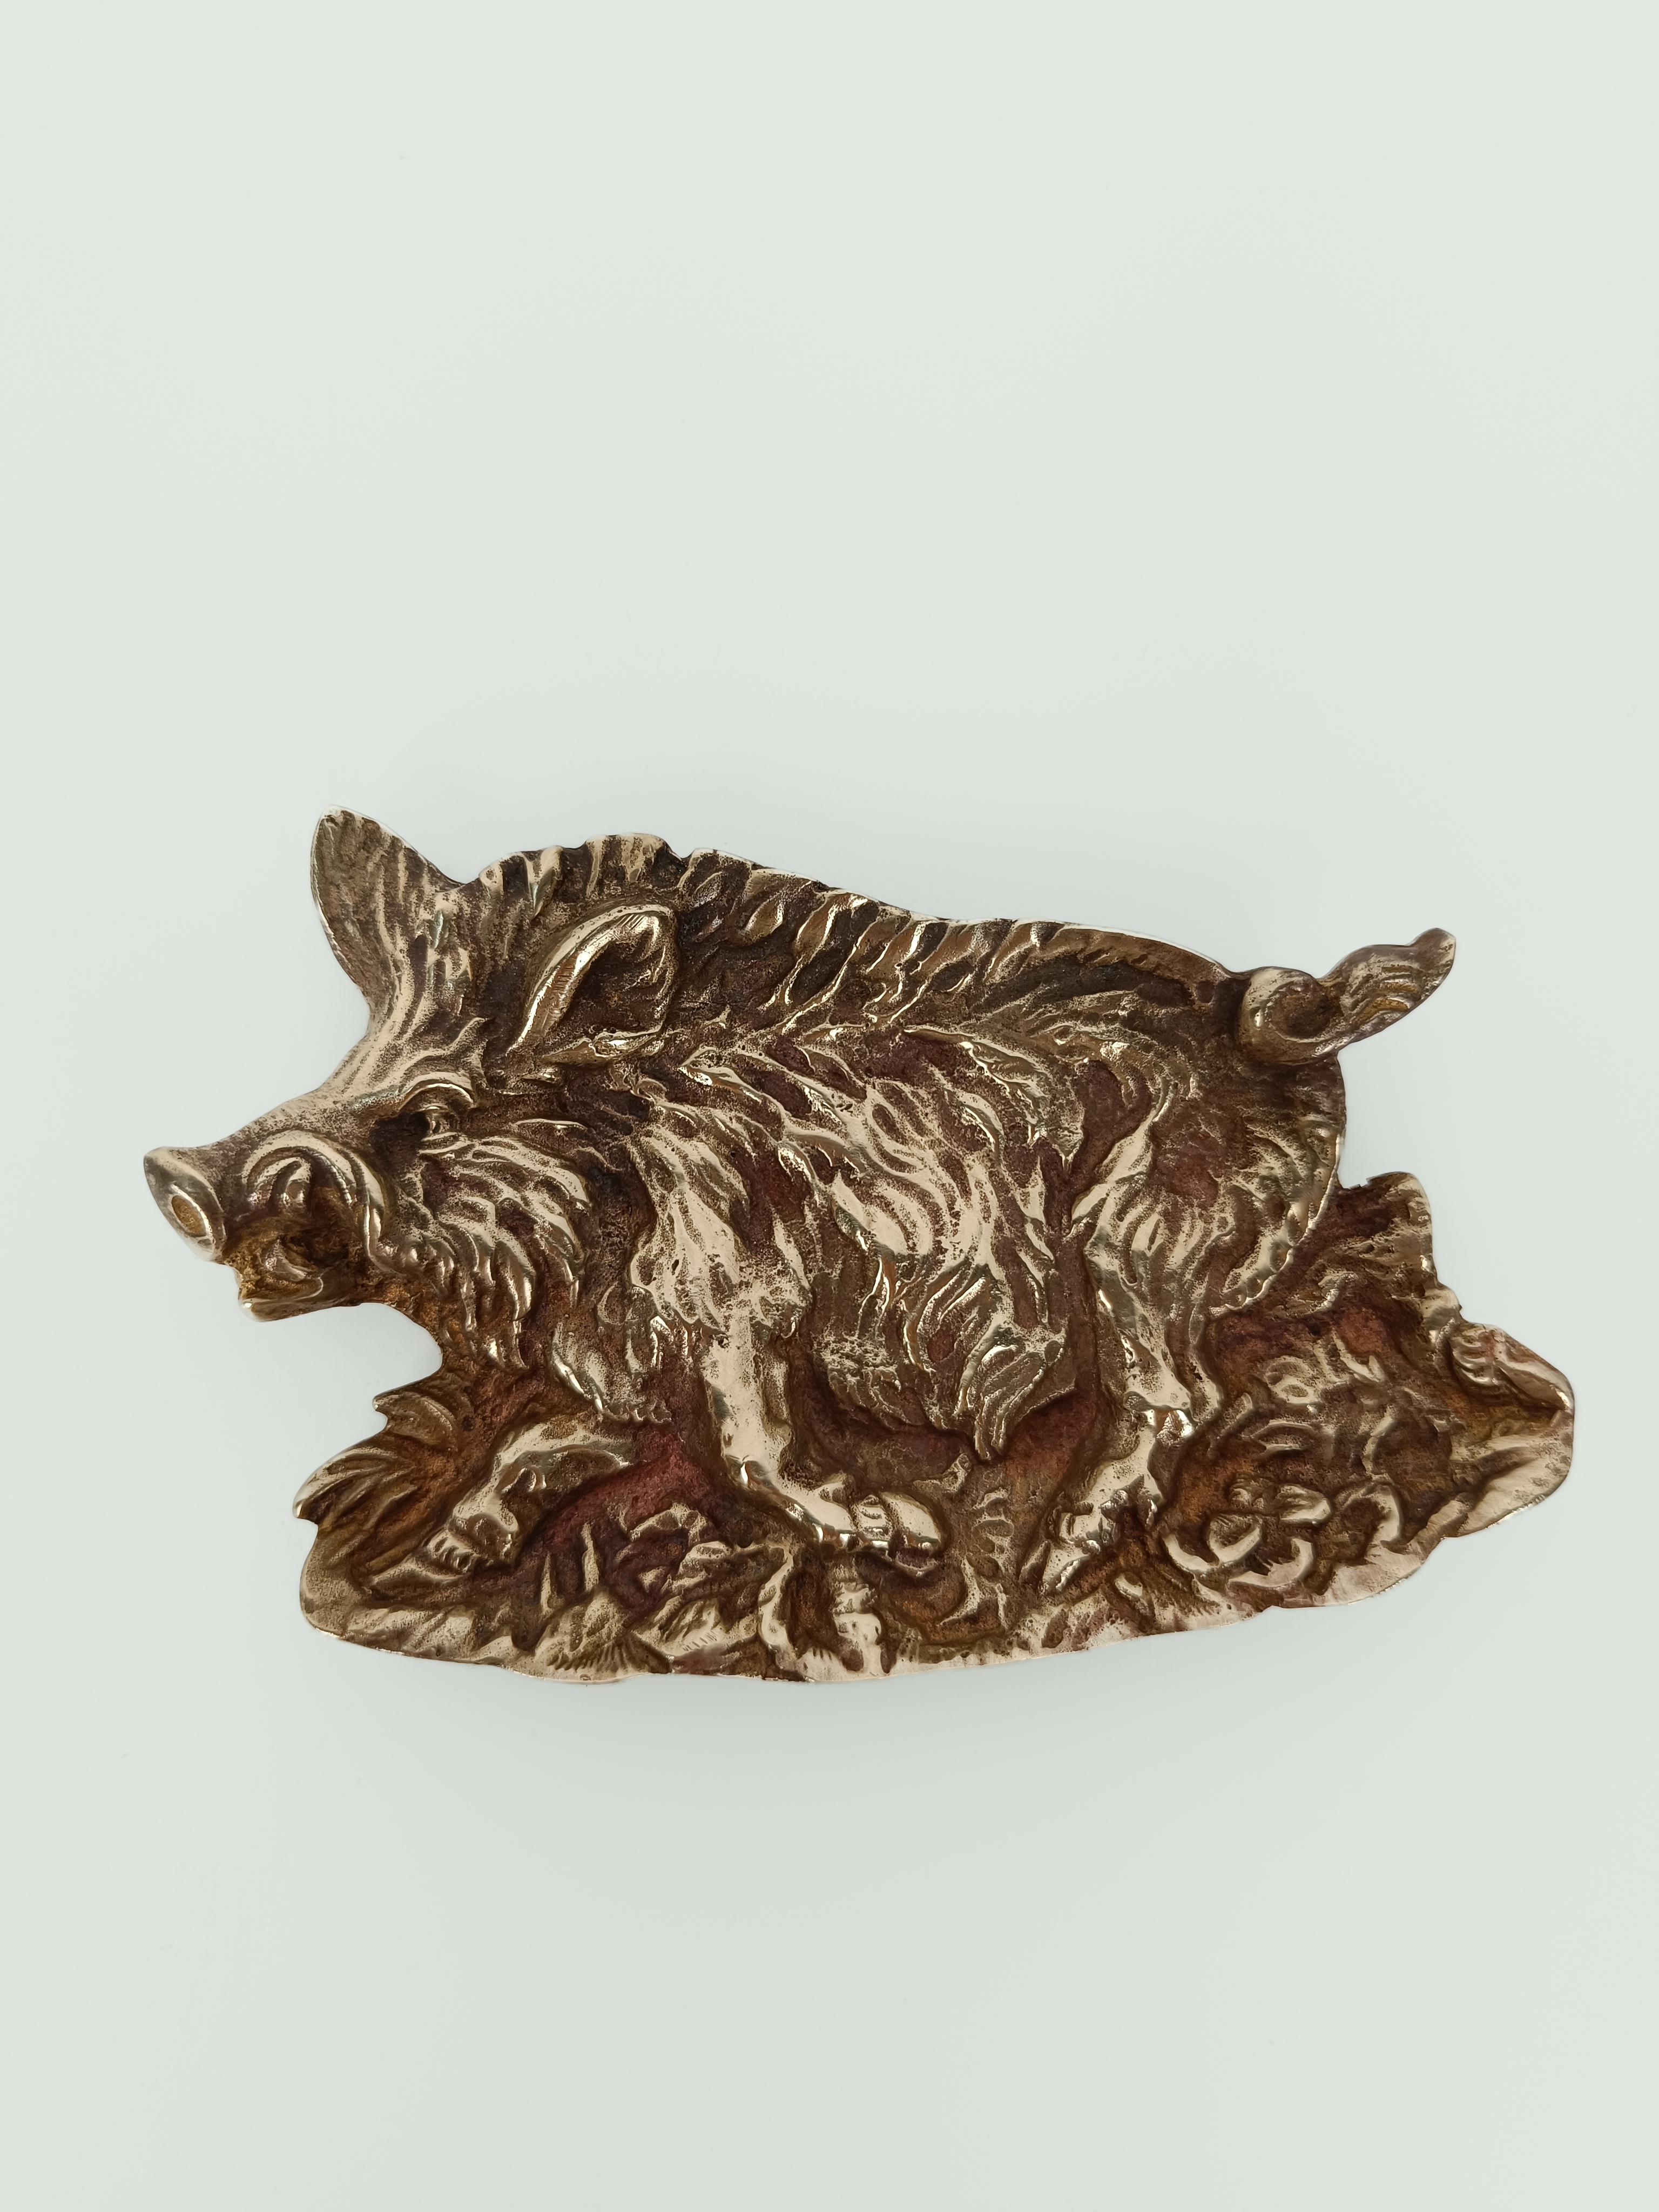 Vintage Brass Ashtray Depicting the Mythological Erymanthian Boar, Italy 1970s For Sale 1